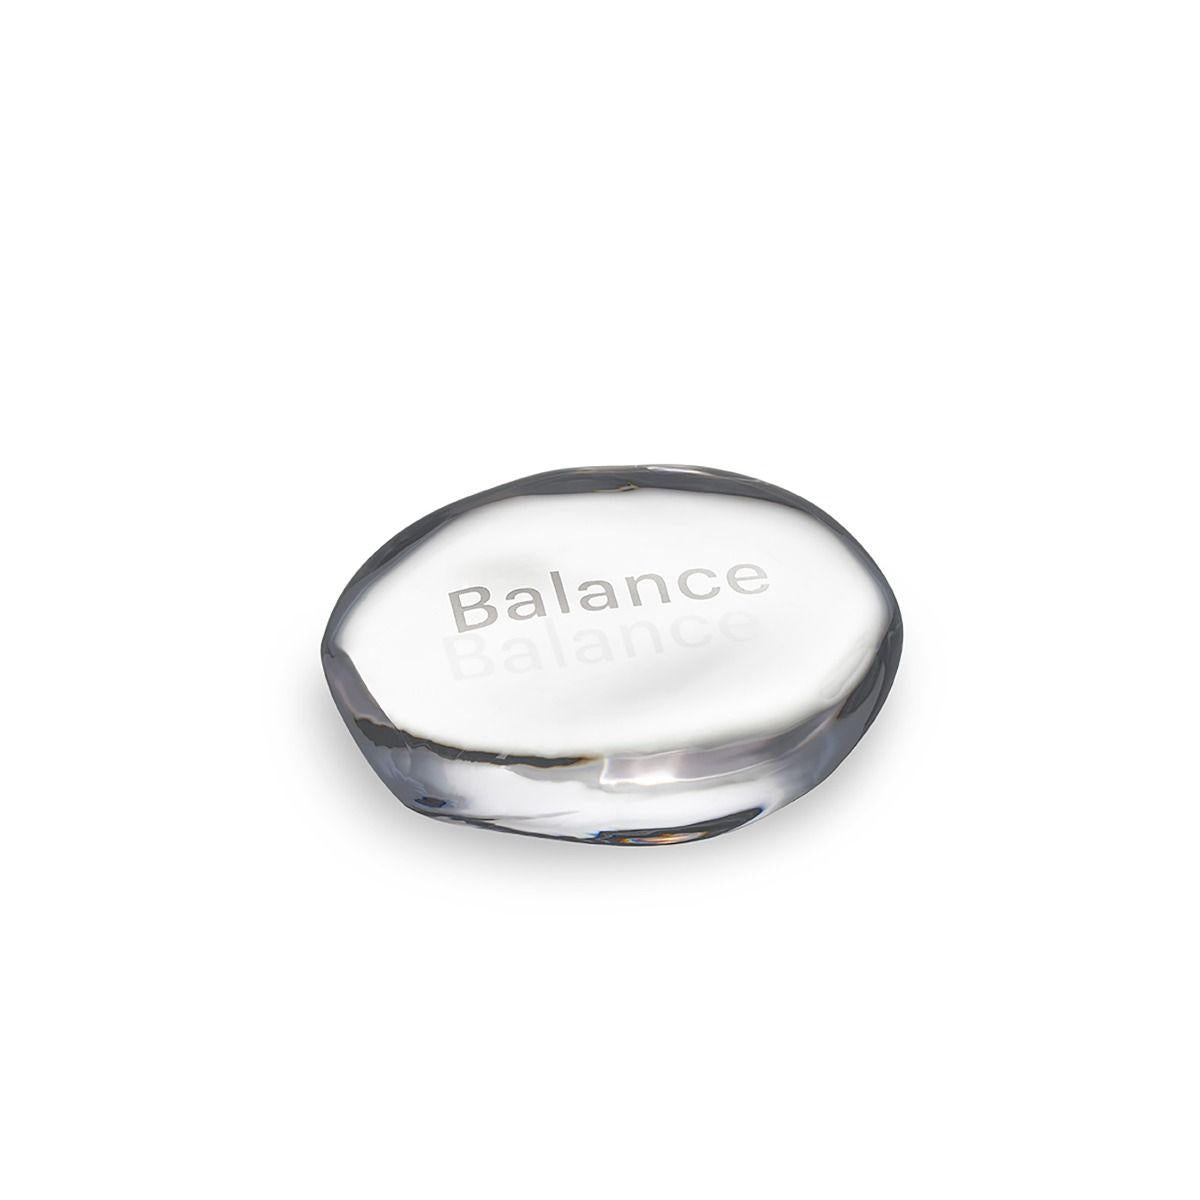 Balance Stone with Gift Box